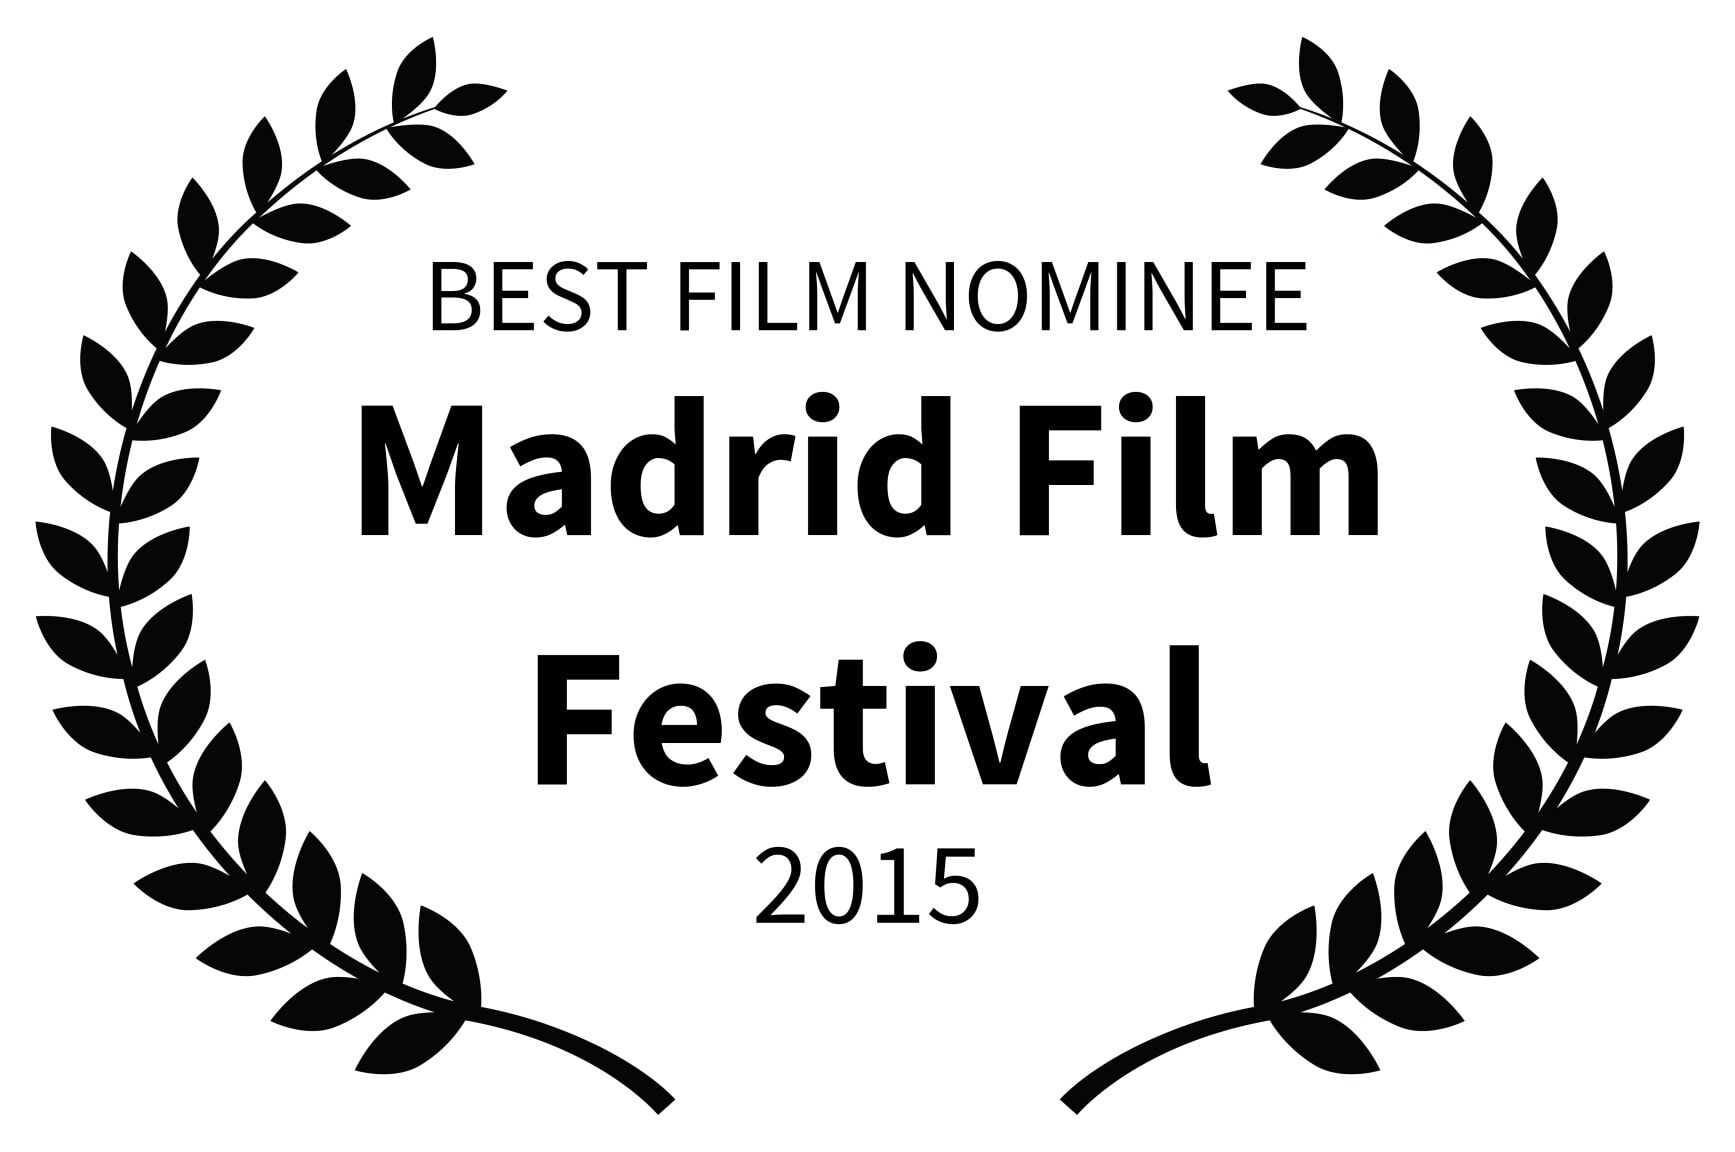 BEST FILM NOMINEE - Madrid Film Festival - 2015